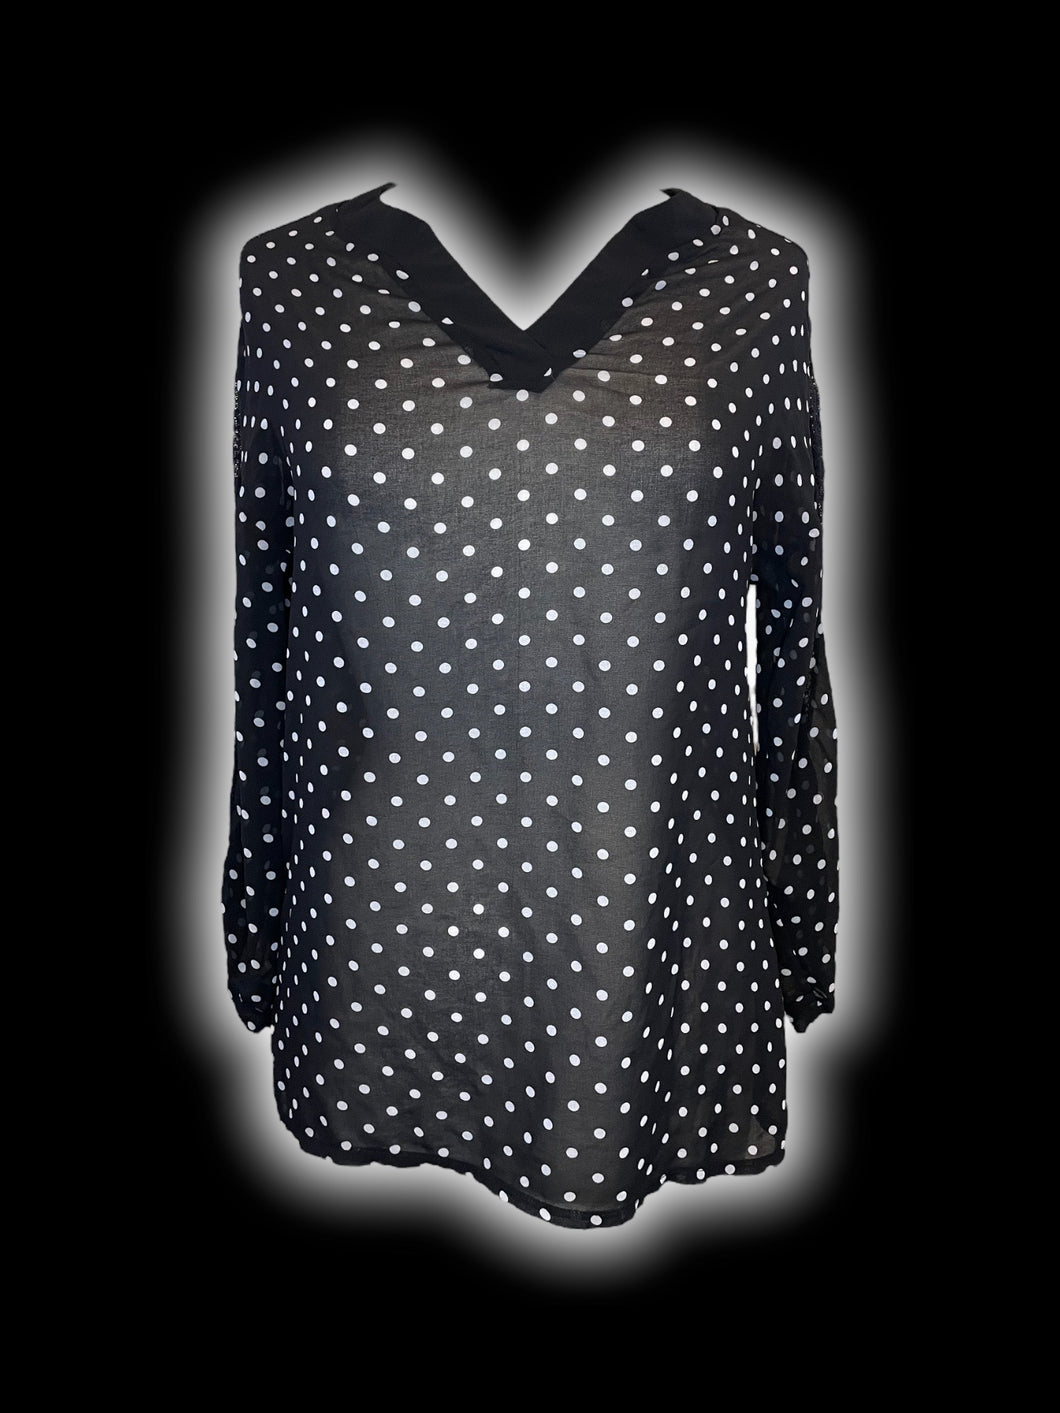 L Black & white sheer polka dot long sleeve notch neckline top w/ lace details